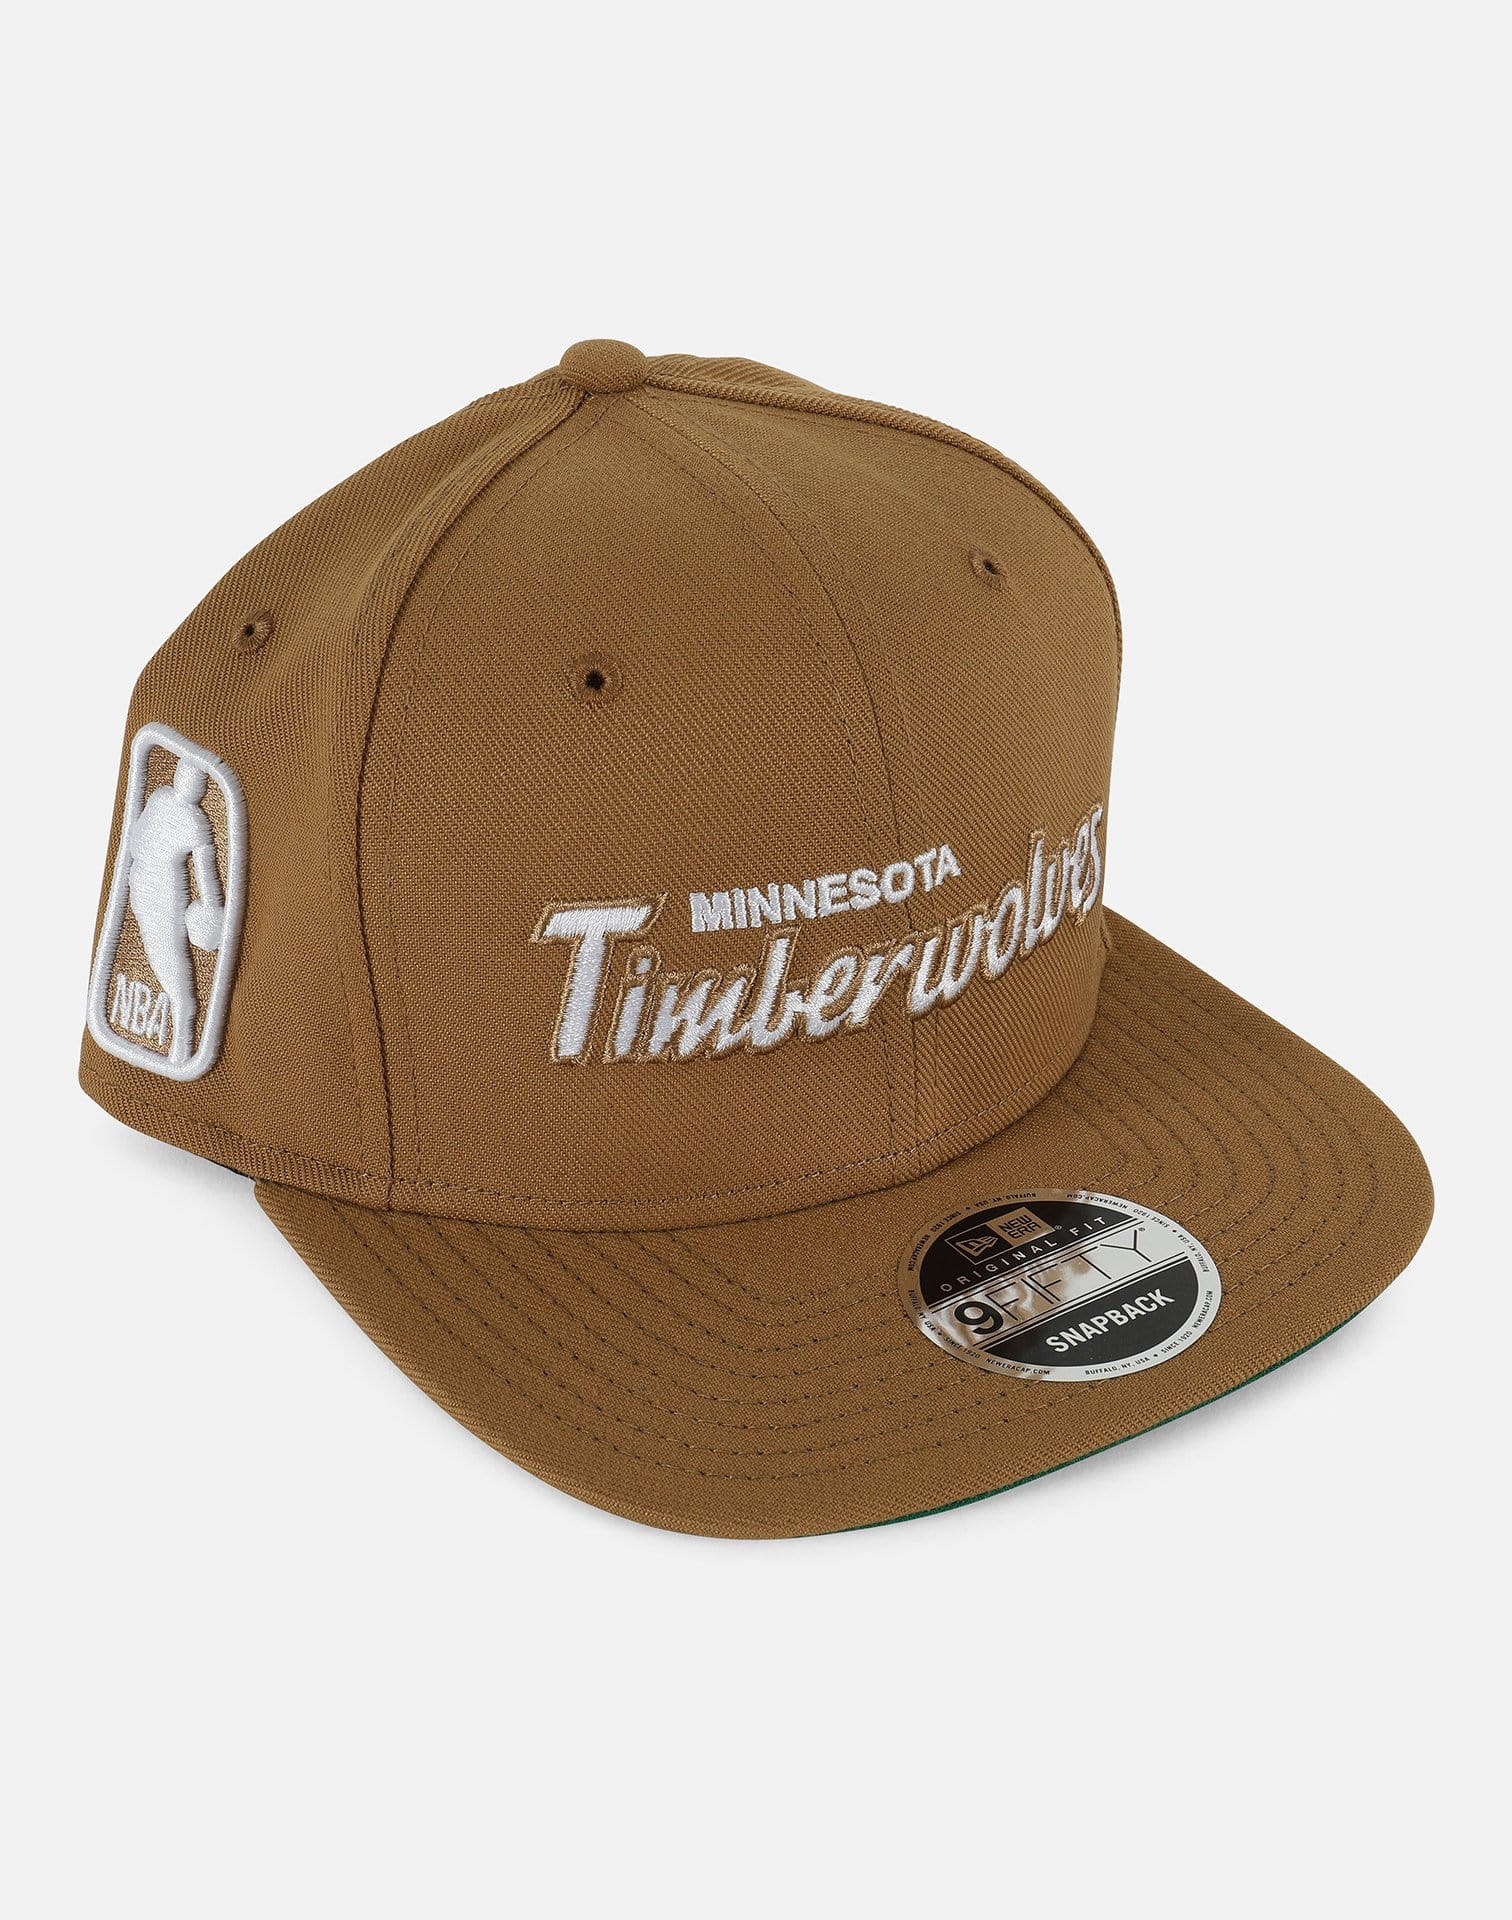 New Era 950 NBA Minnesota Timberwolves Snapback Hat